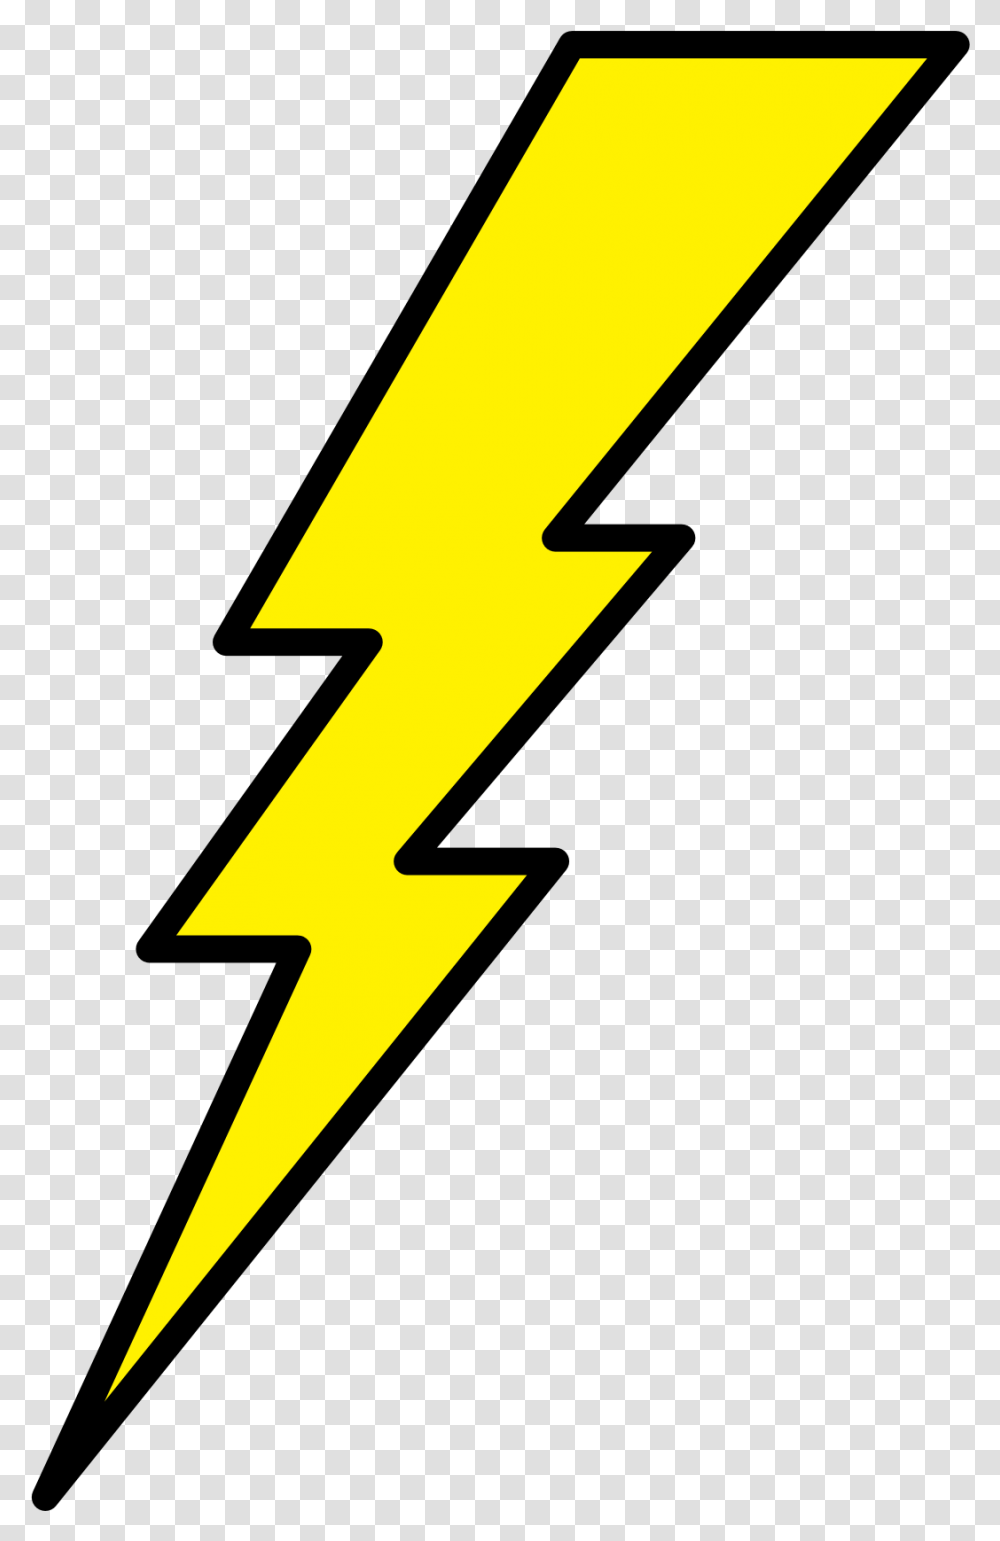 Fileharry Potter Lightningsvg Wikimedia Commons Harry Potter Lightning Bolt, Symbol, Axe, Tool, Text Transparent Png